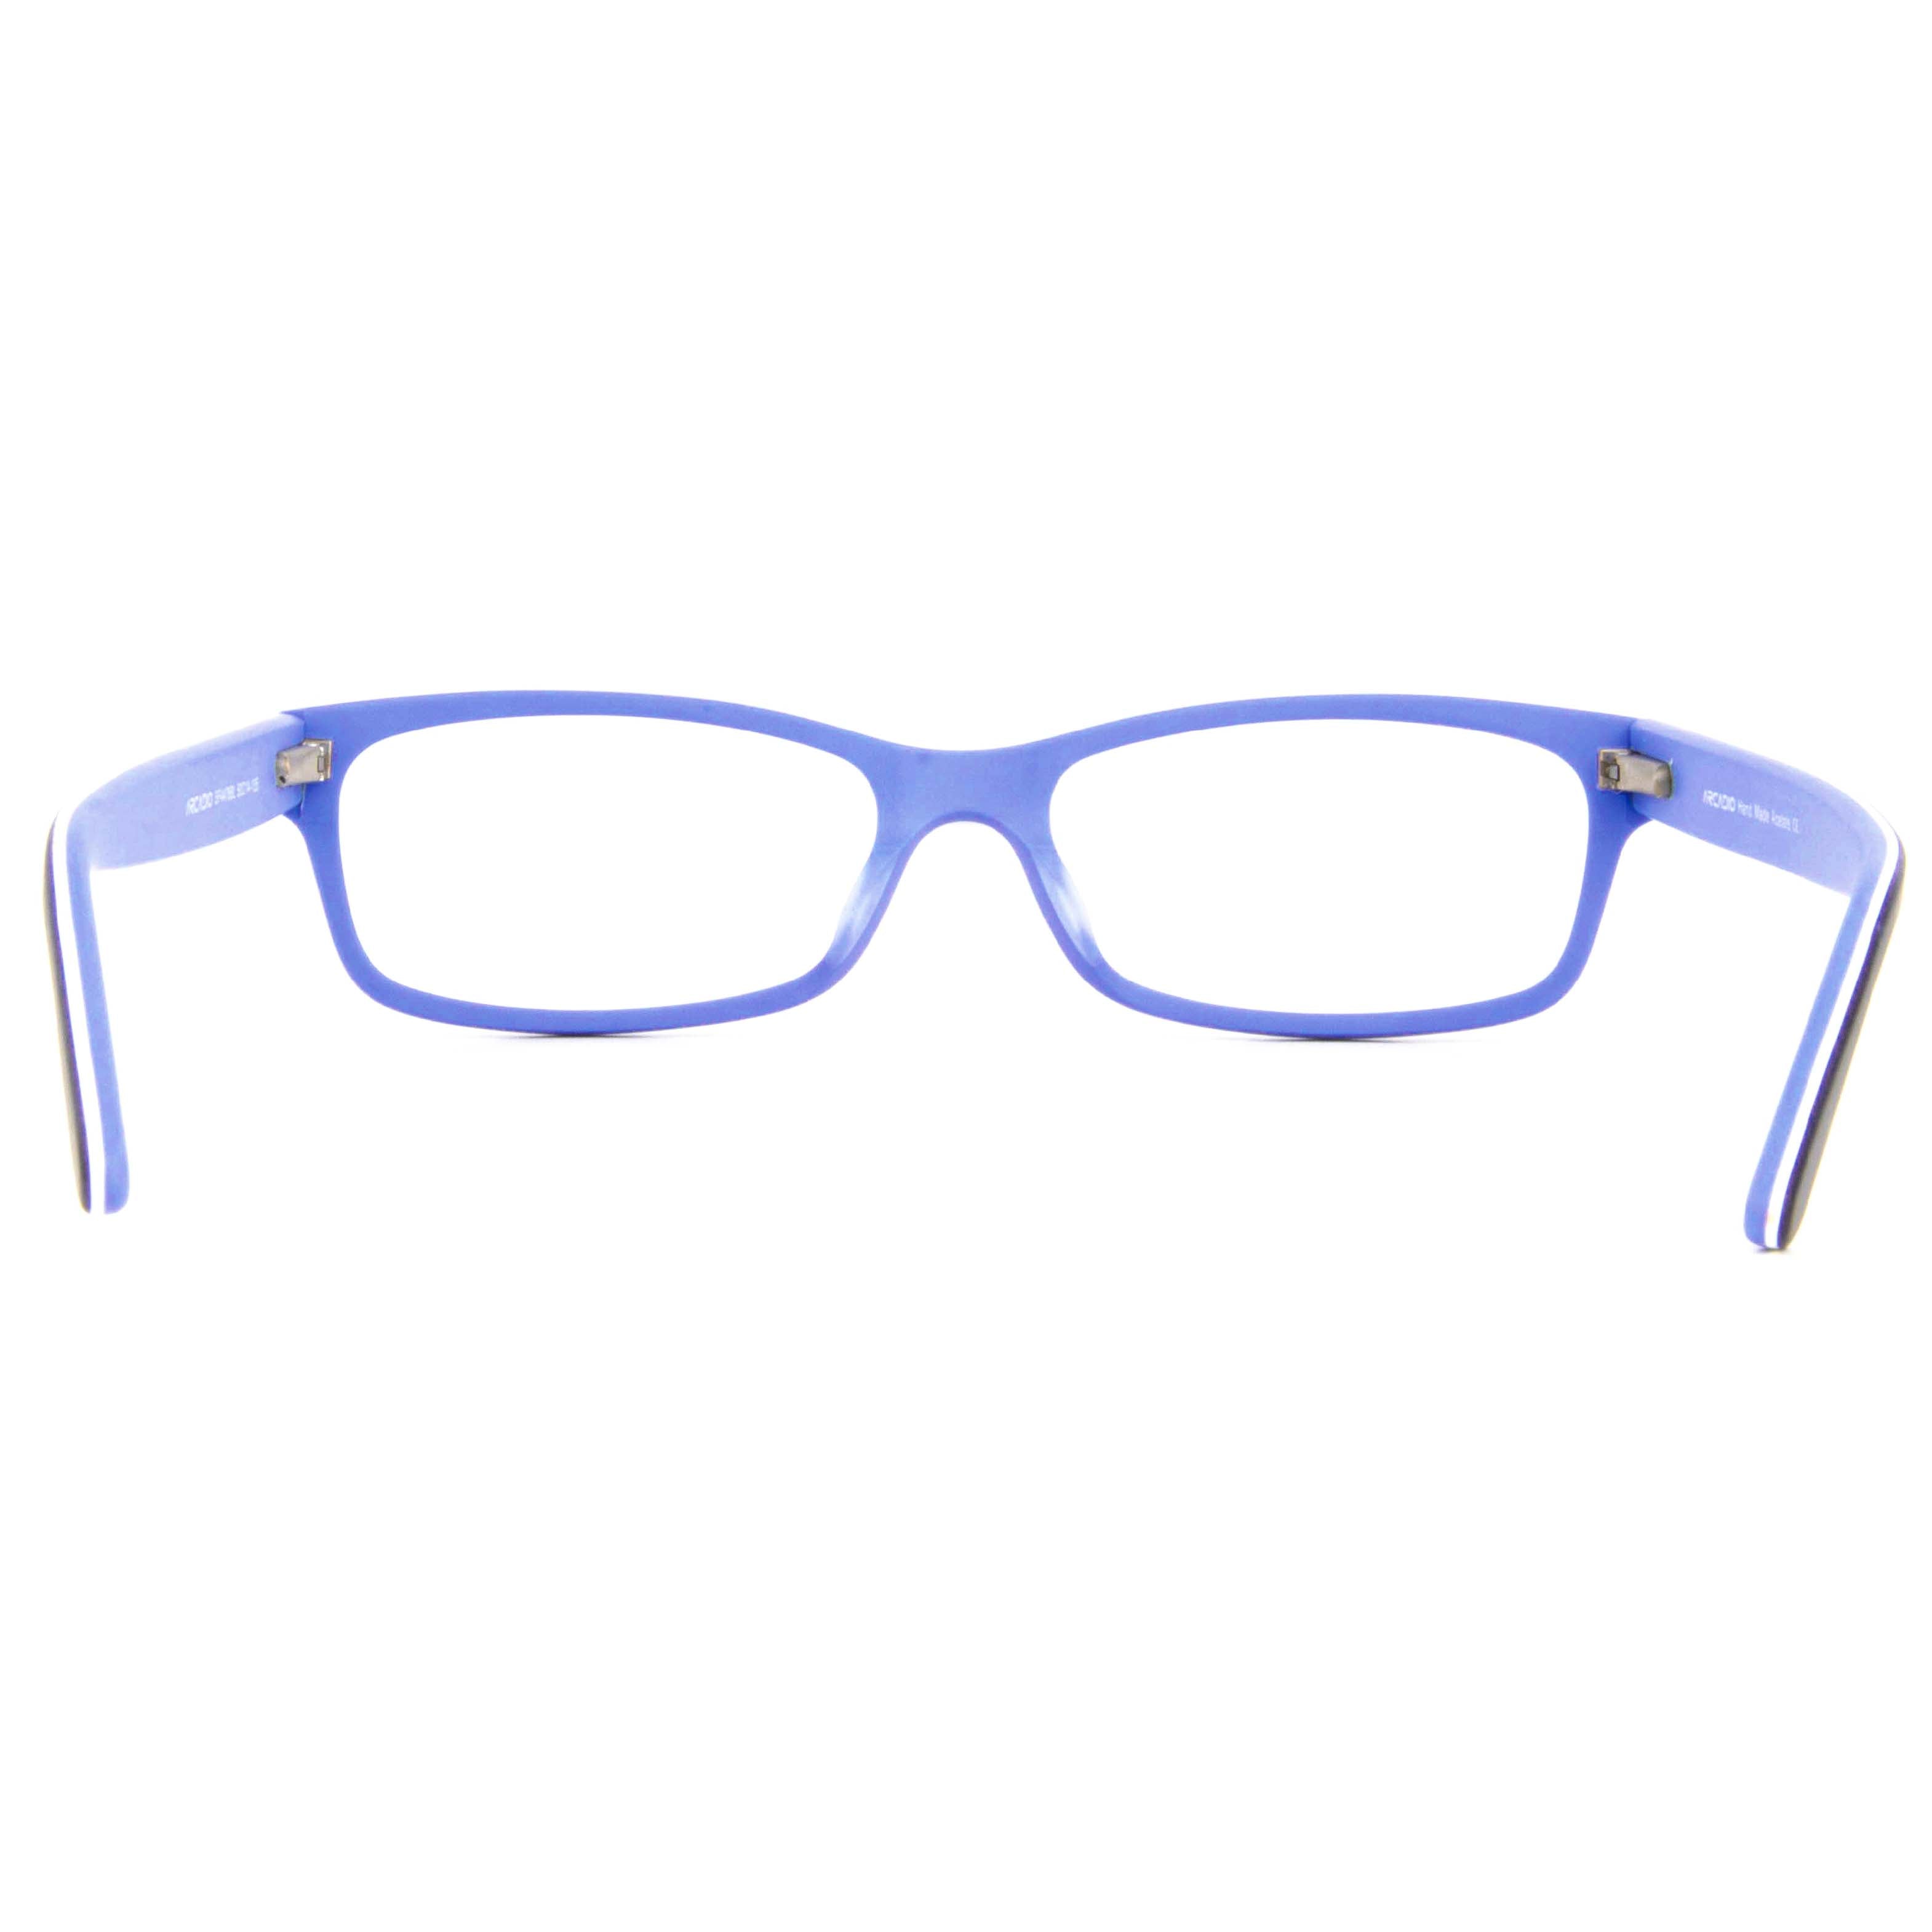 BRAVO Modern Edgy Eyeglasses for Teens SF4478 ARCADIO